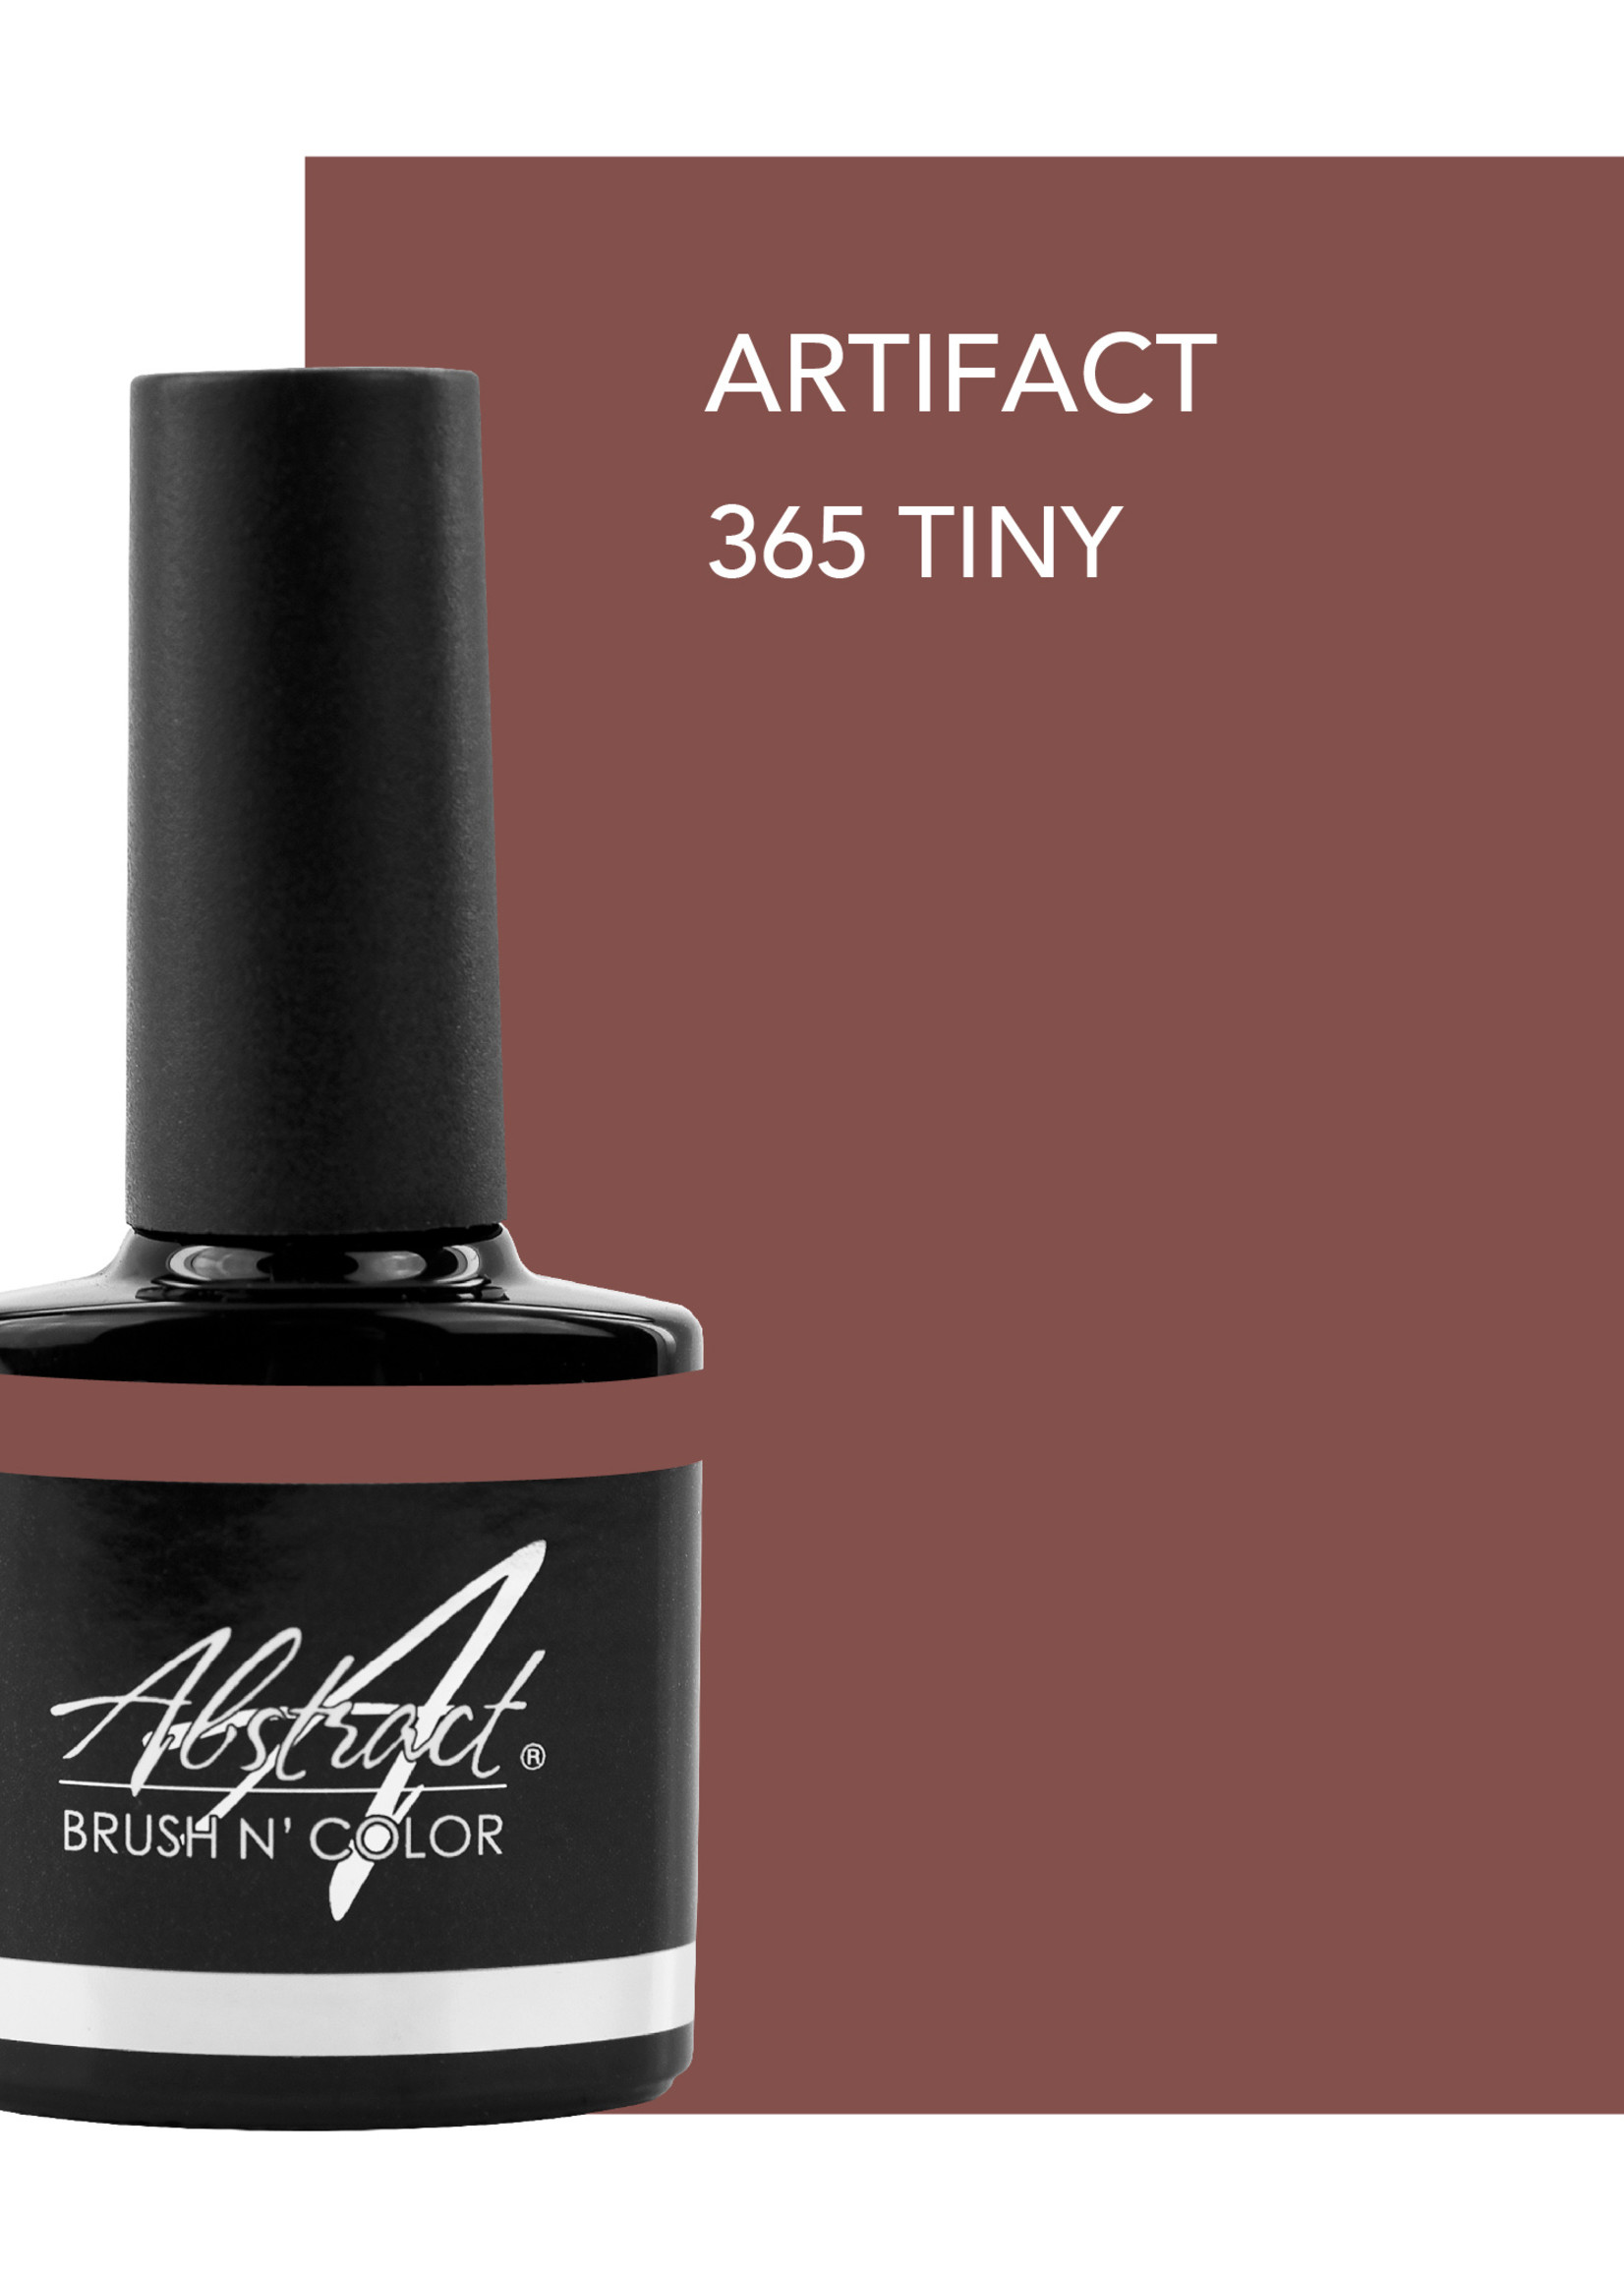 Abstract® Brush N' Color Tiny 7.5 ml Artifact